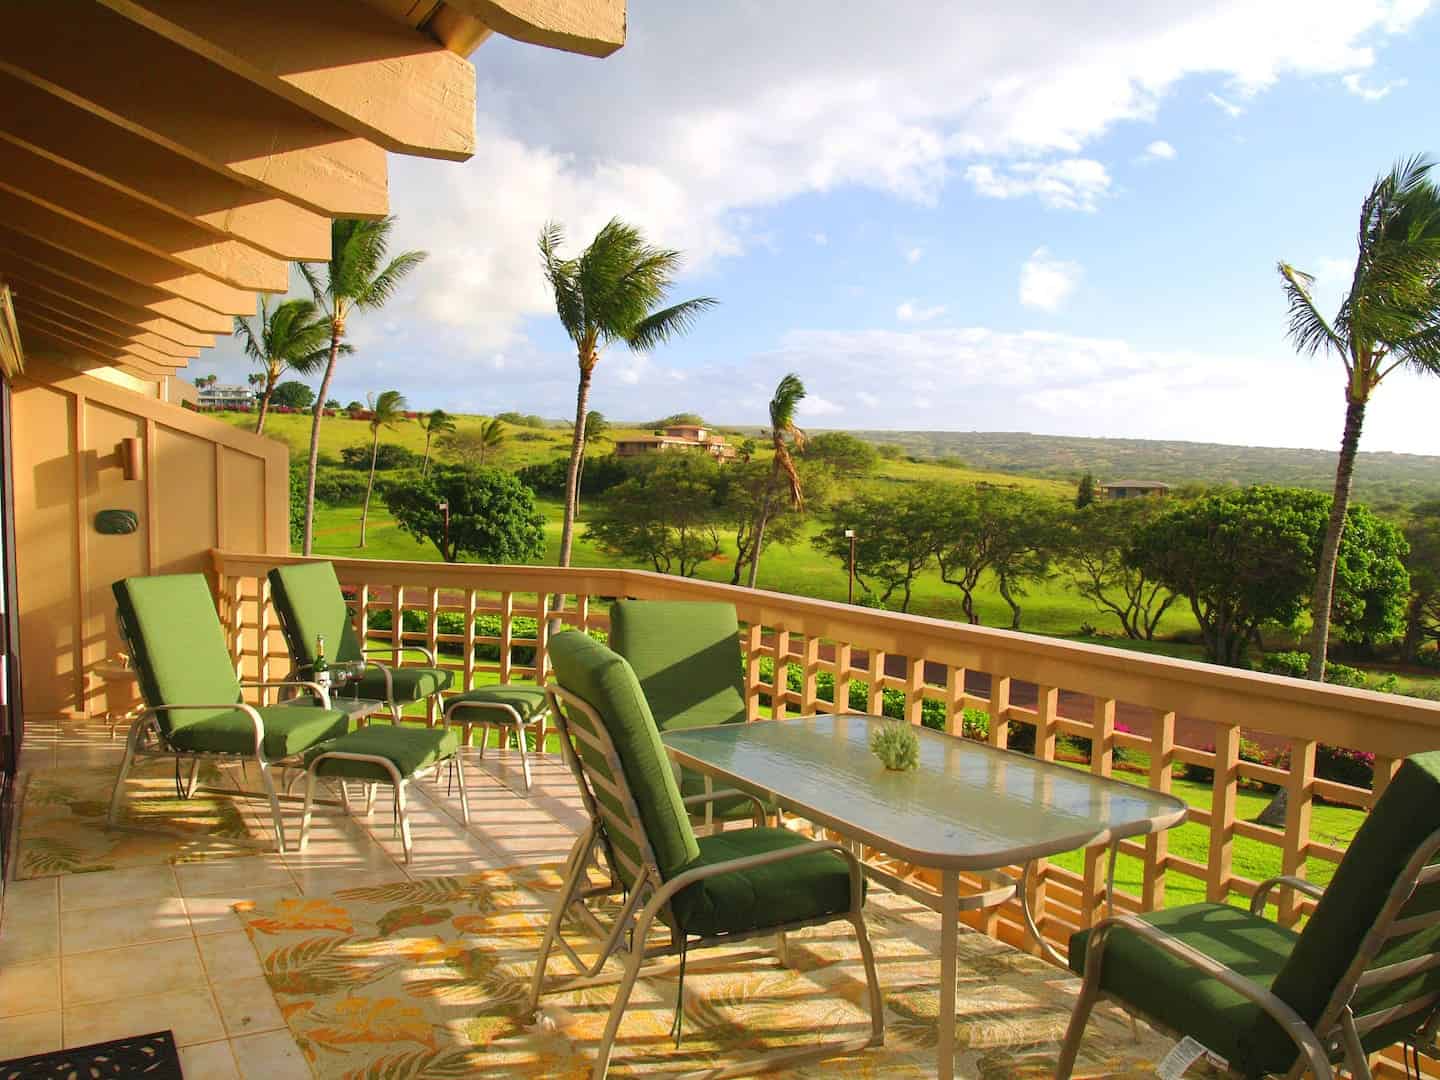 Image of Airbnb rental in Molokai, Hawaii